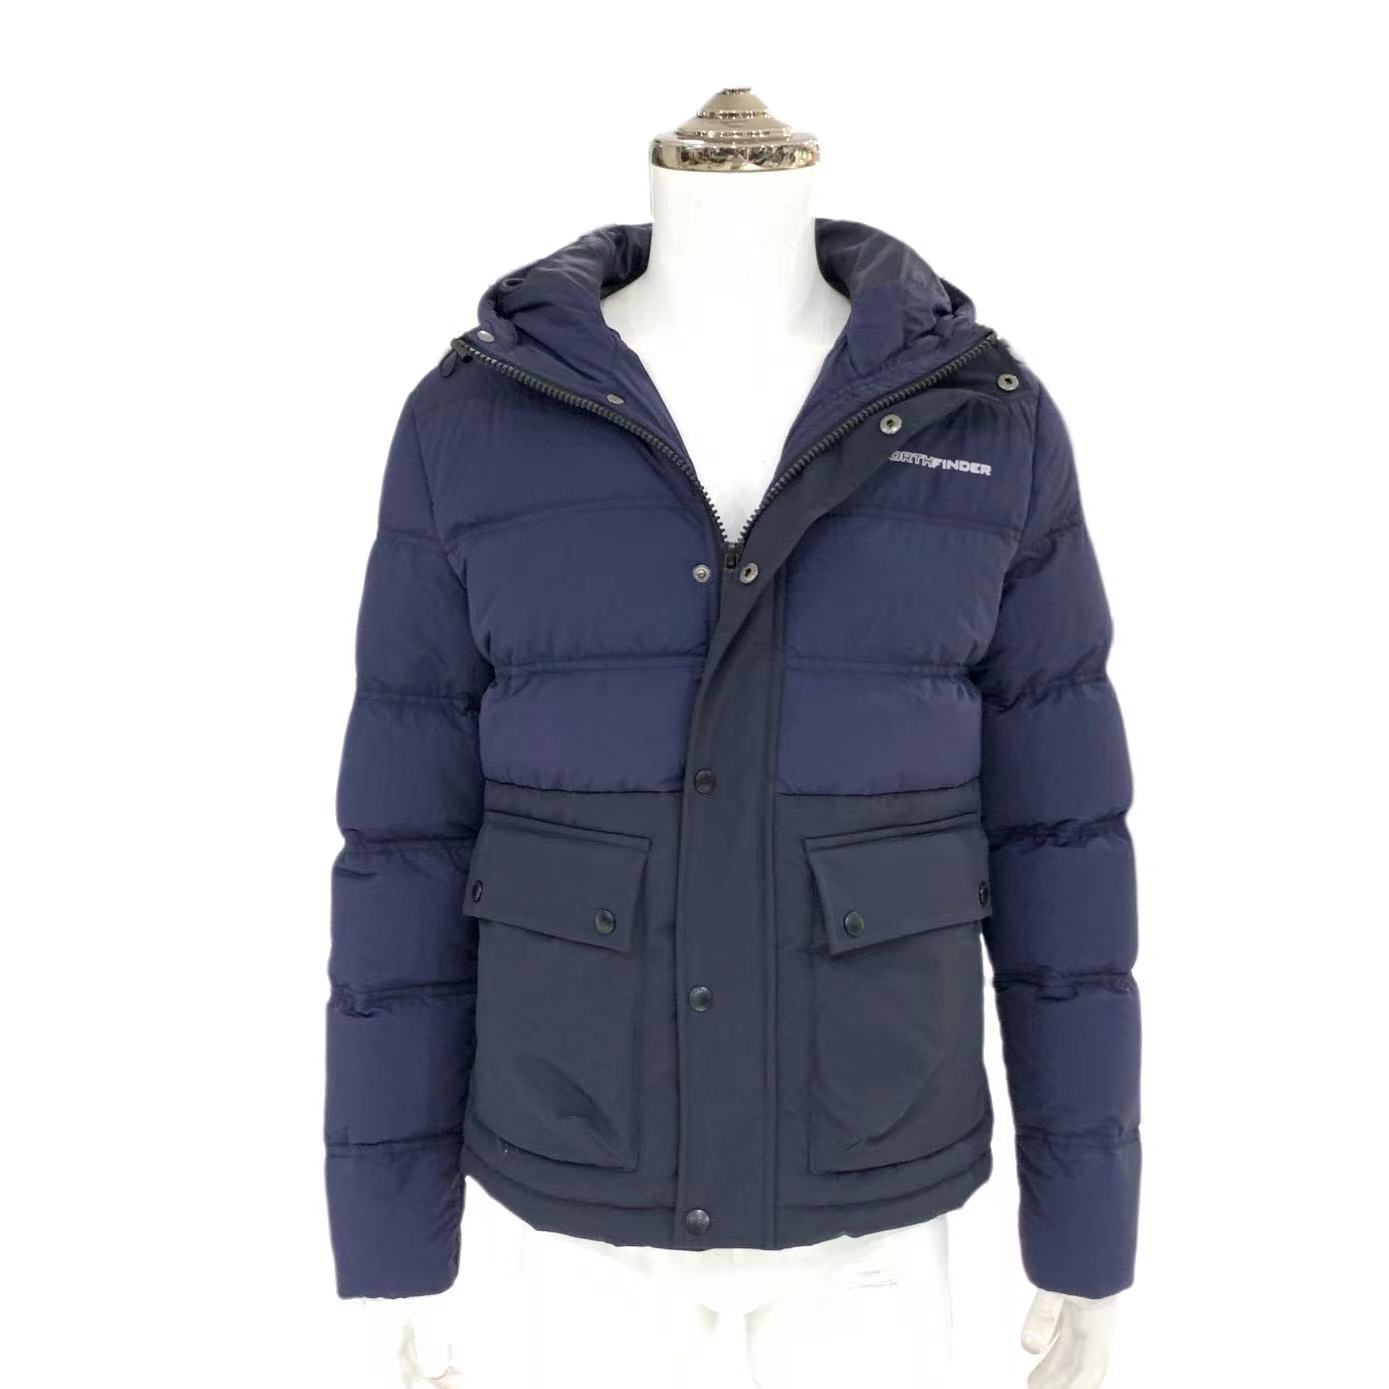 Men's winter jacket fashion workmanship